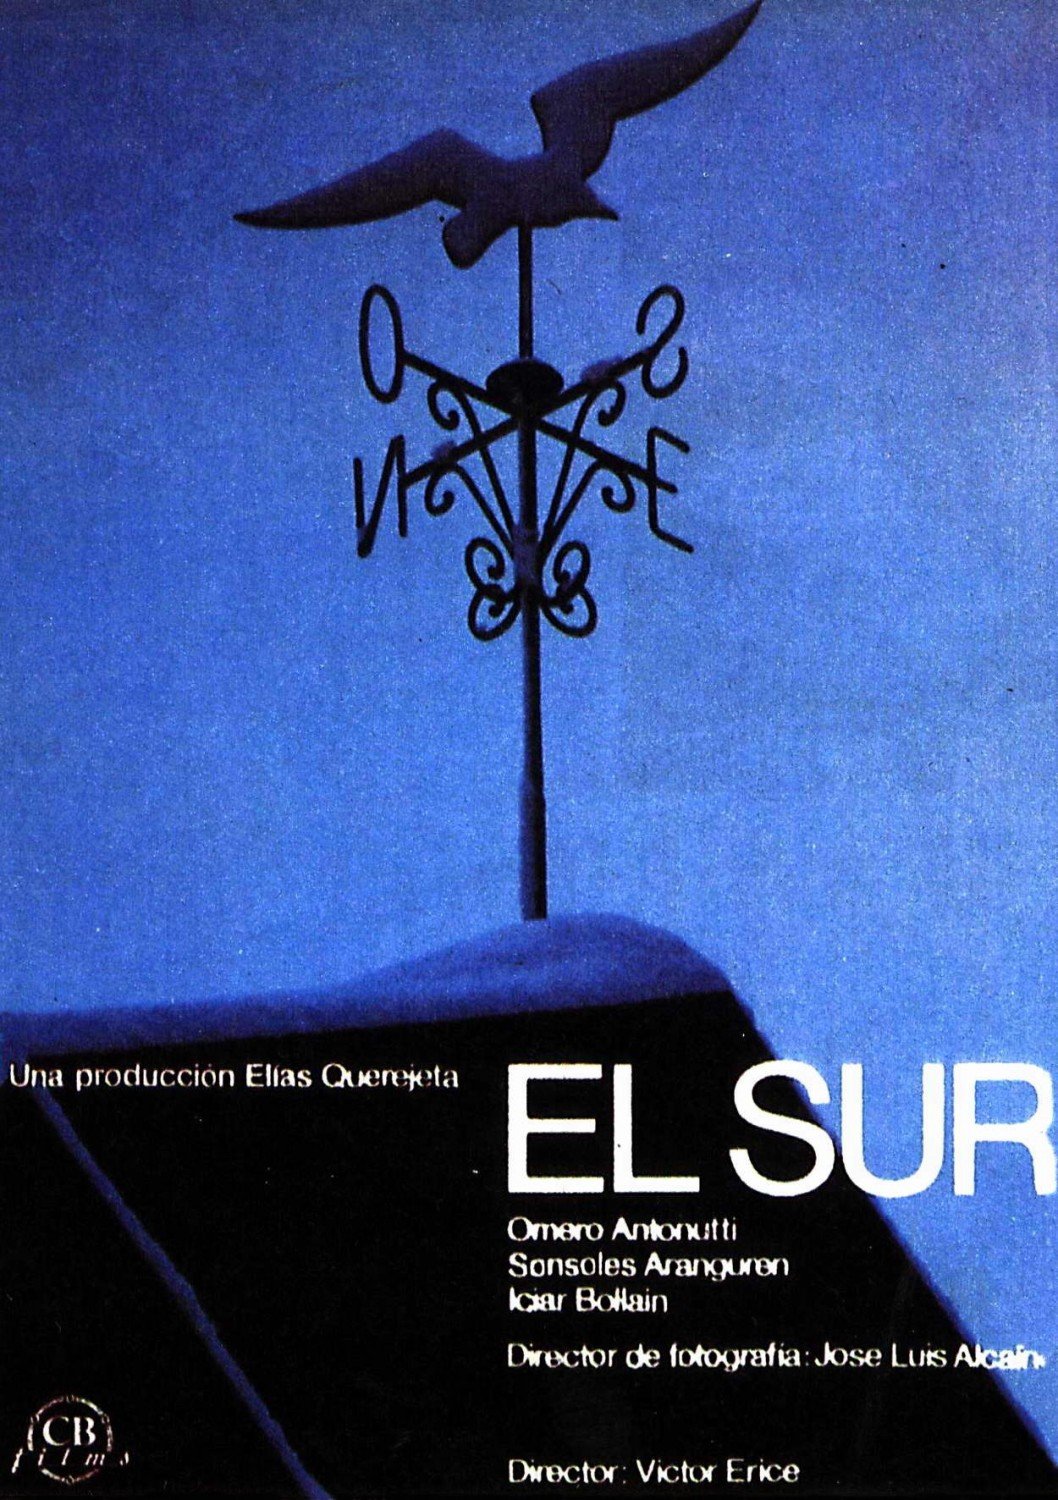 Spanish poster of the movie El Sur